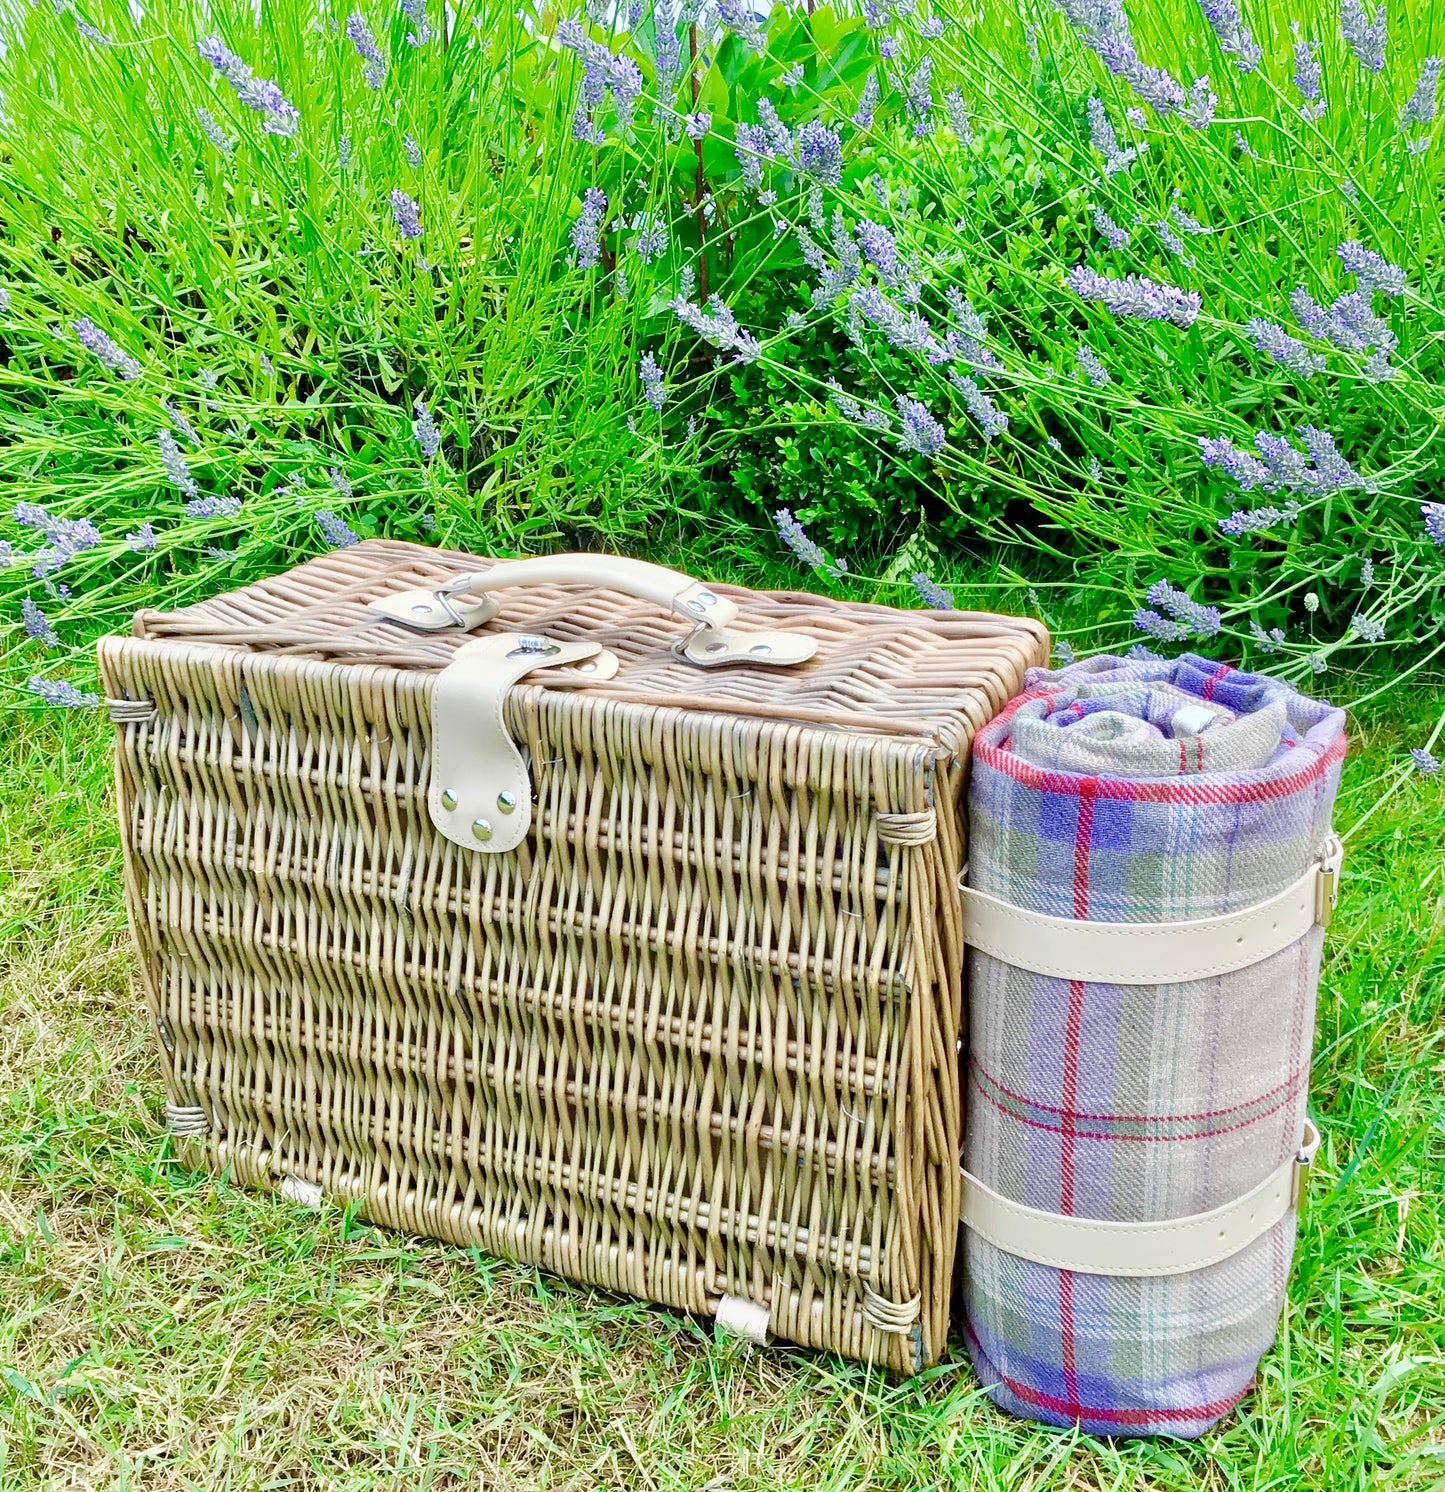 picnic hamper with rug